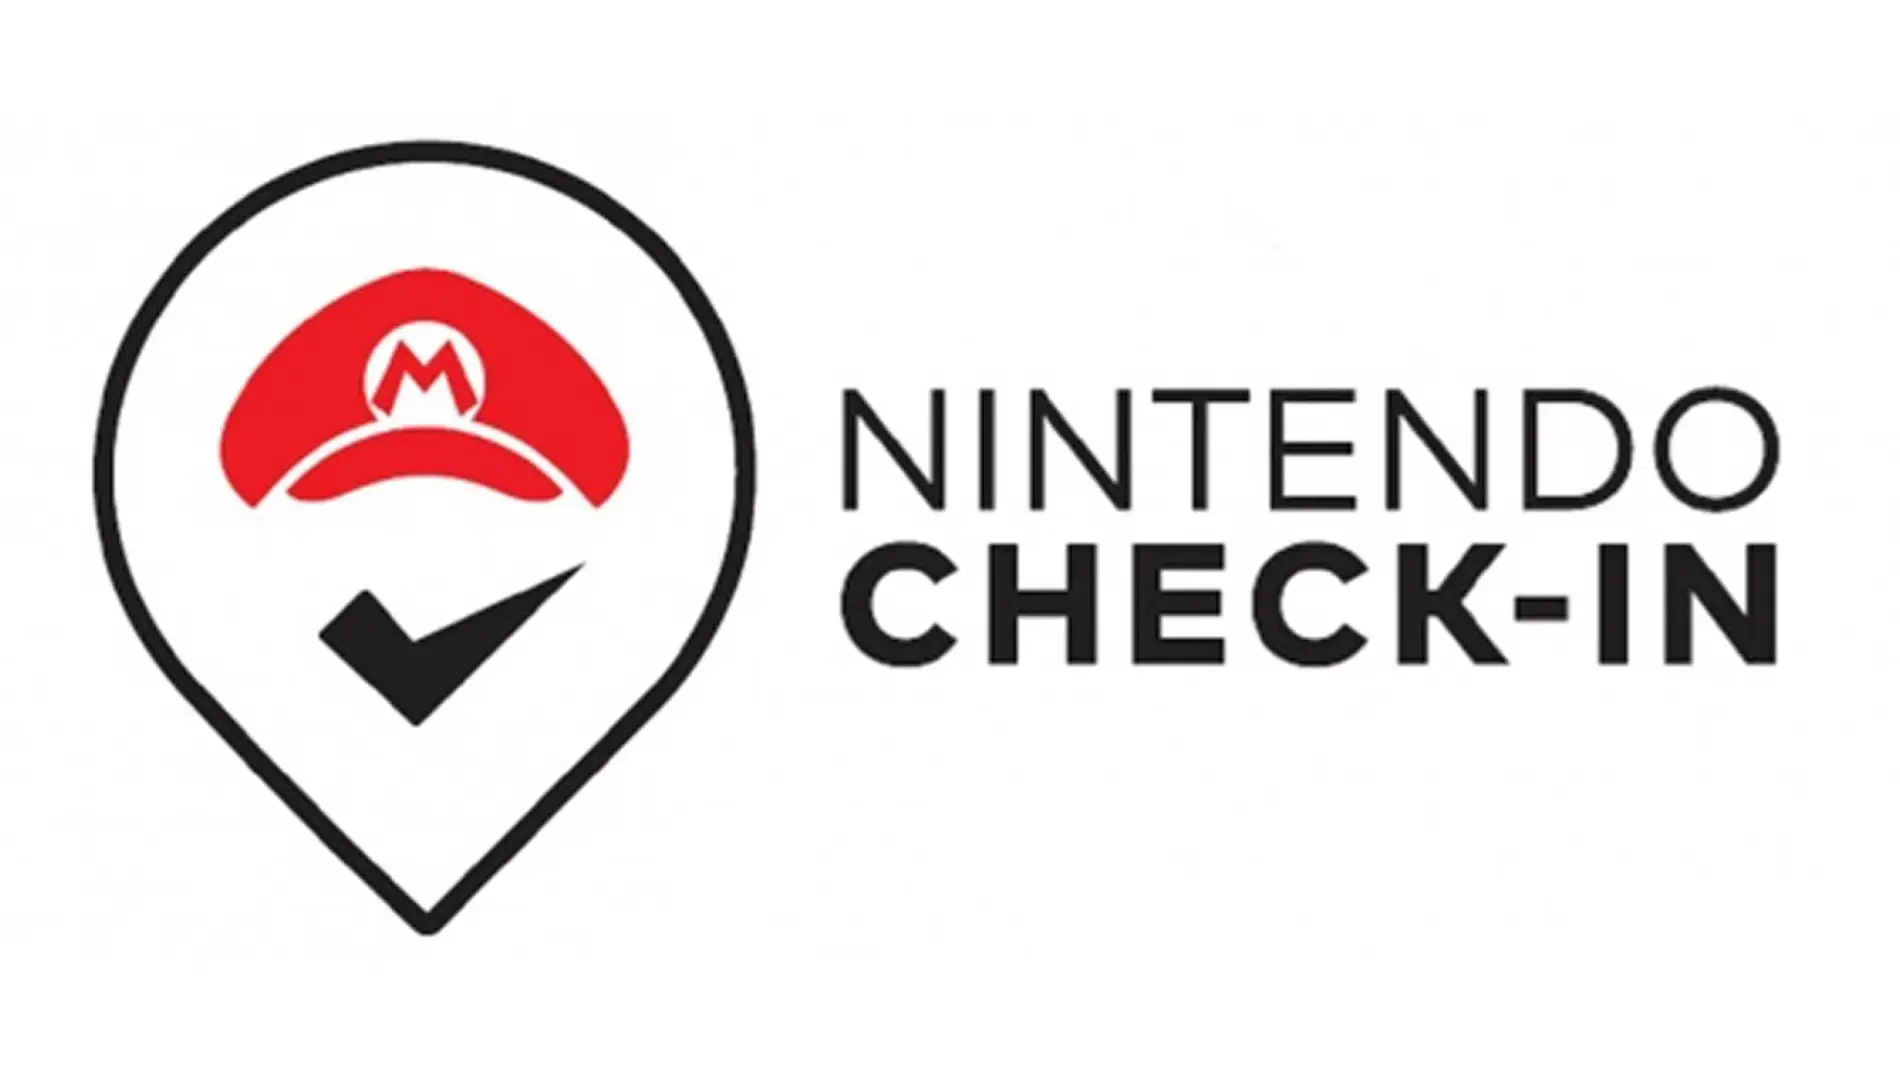 Nintendo Check-In